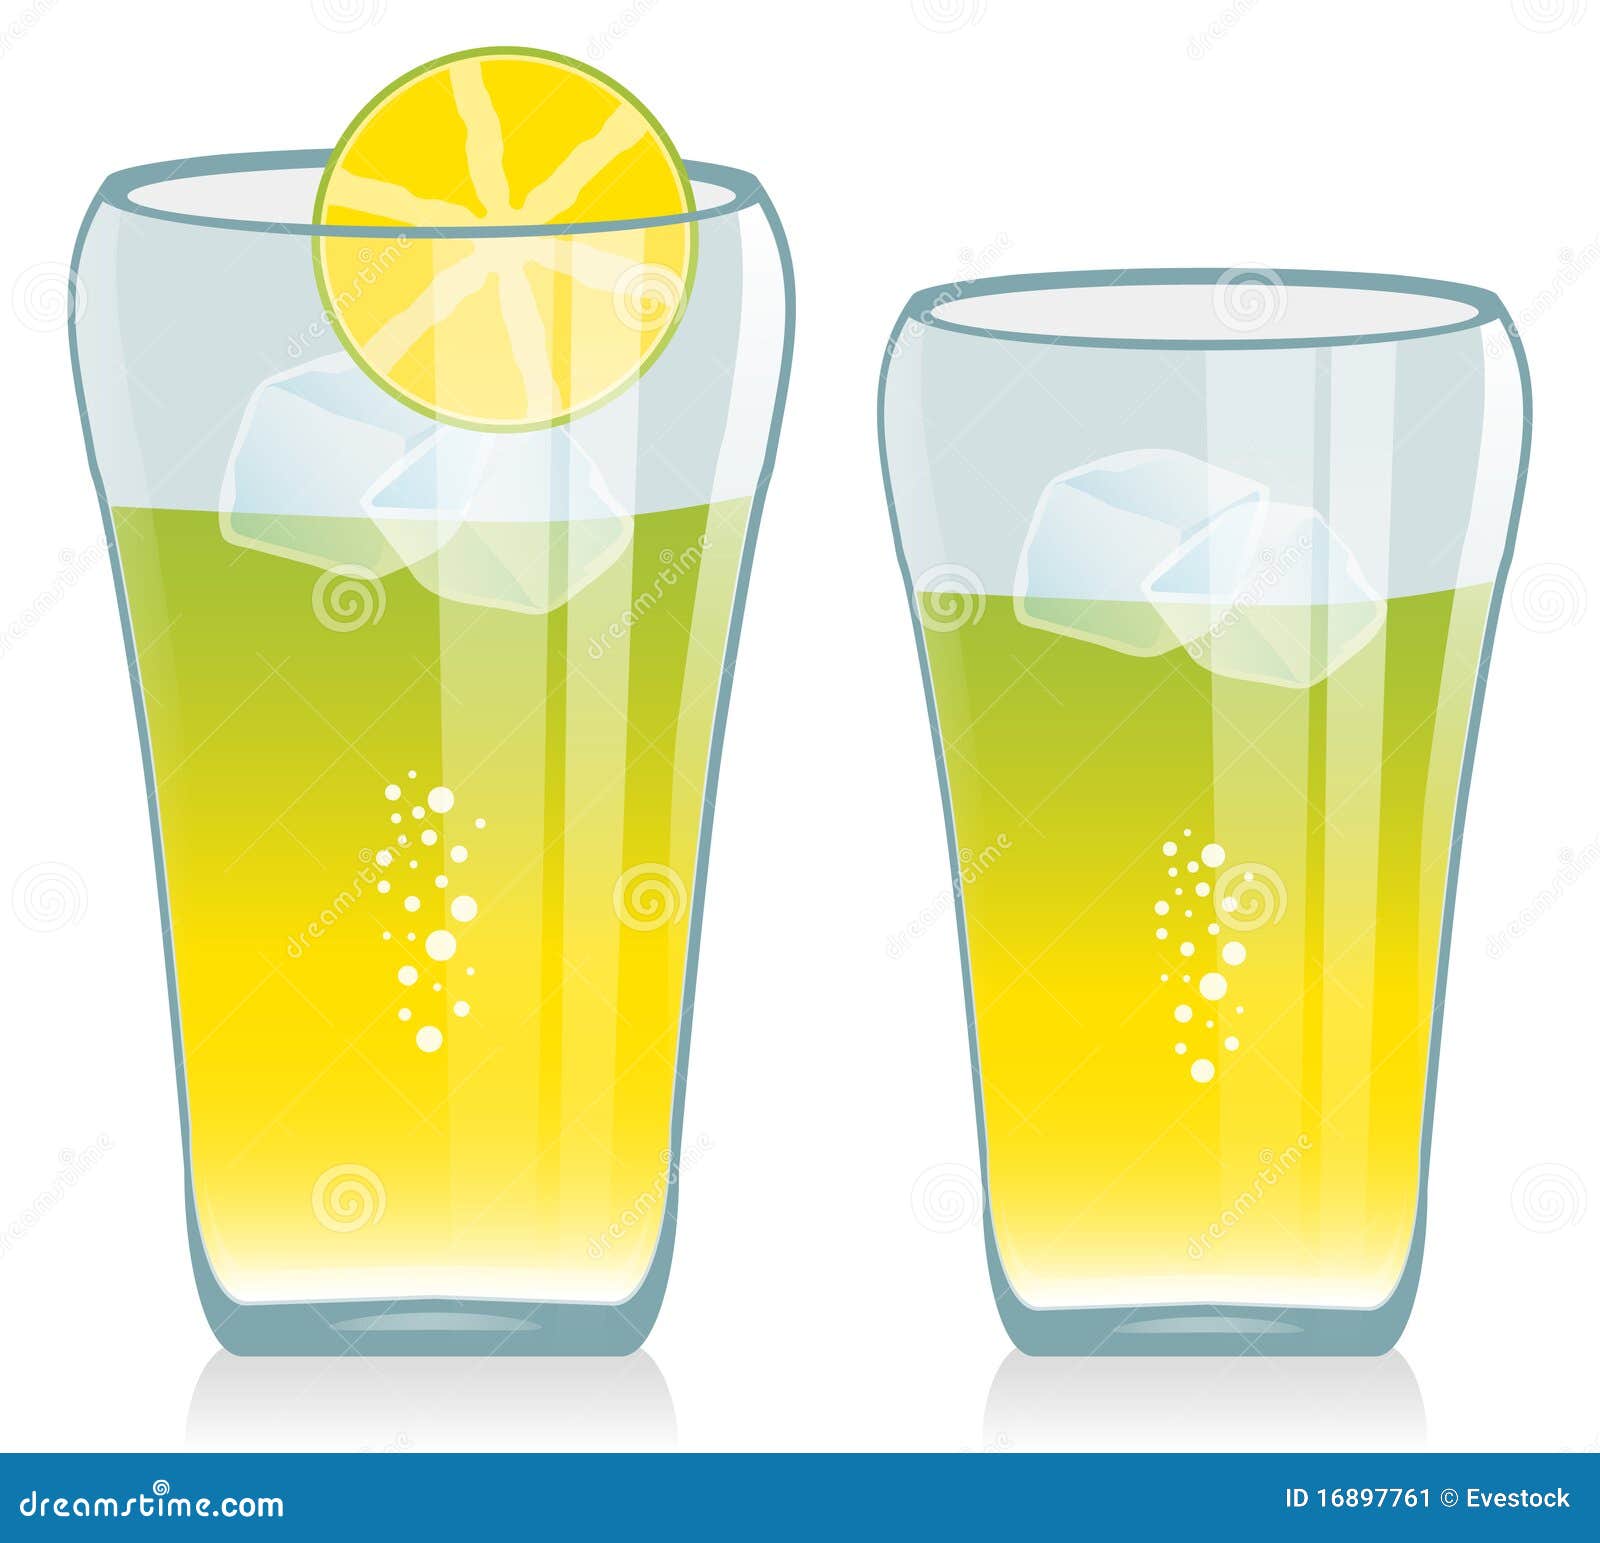 Lemonade stock illustration. Illustration of clip, colorful - 16897761